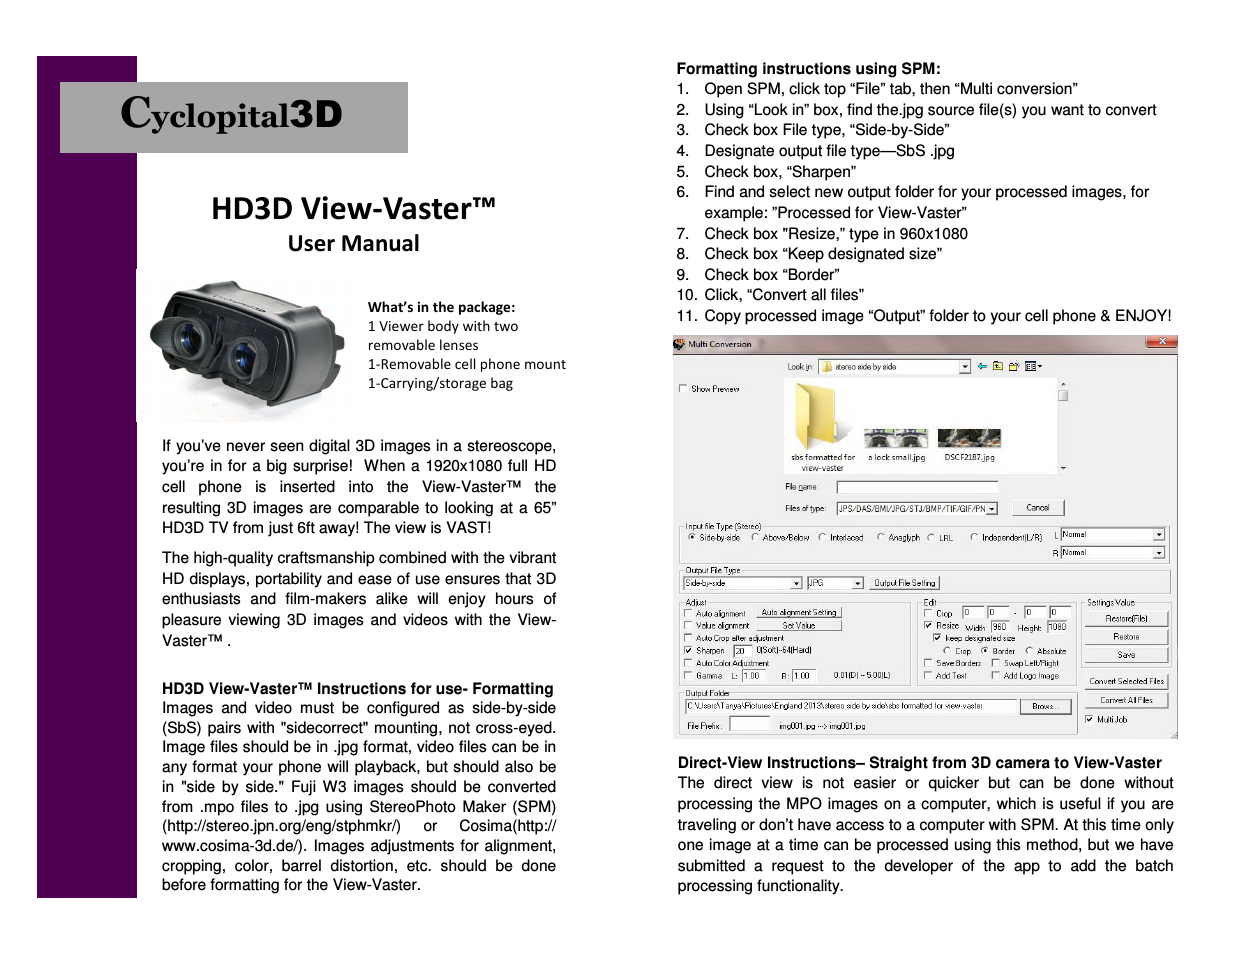 HD3D View-Vaster